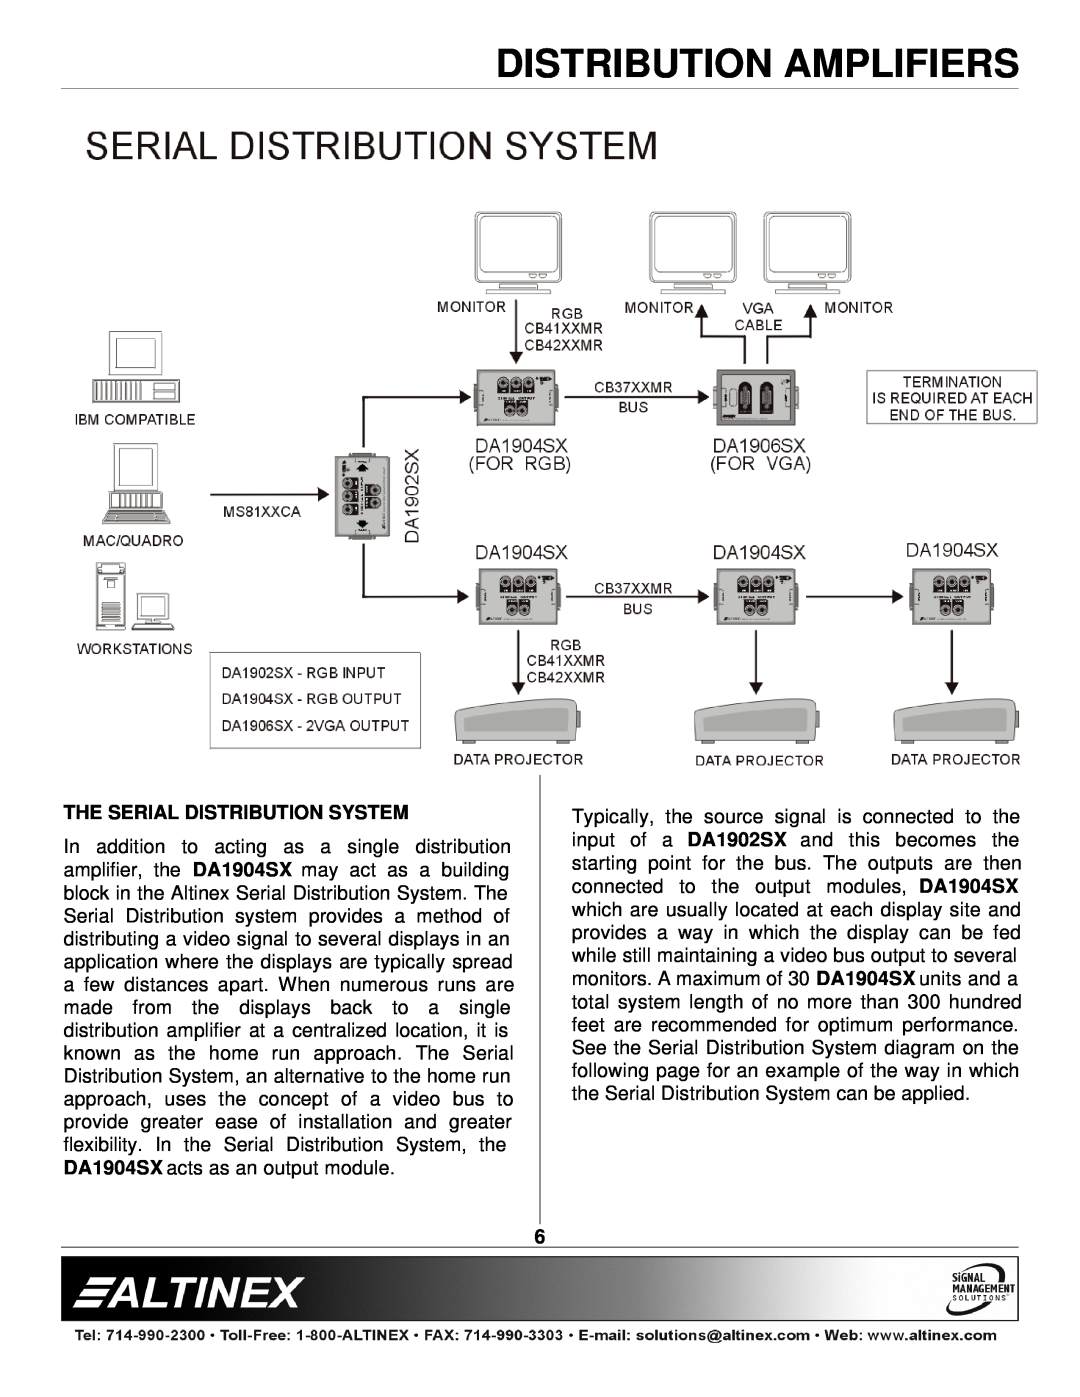 Altinex DA1904SX manual The Serial Distribution System, Distribution Amplifiers 